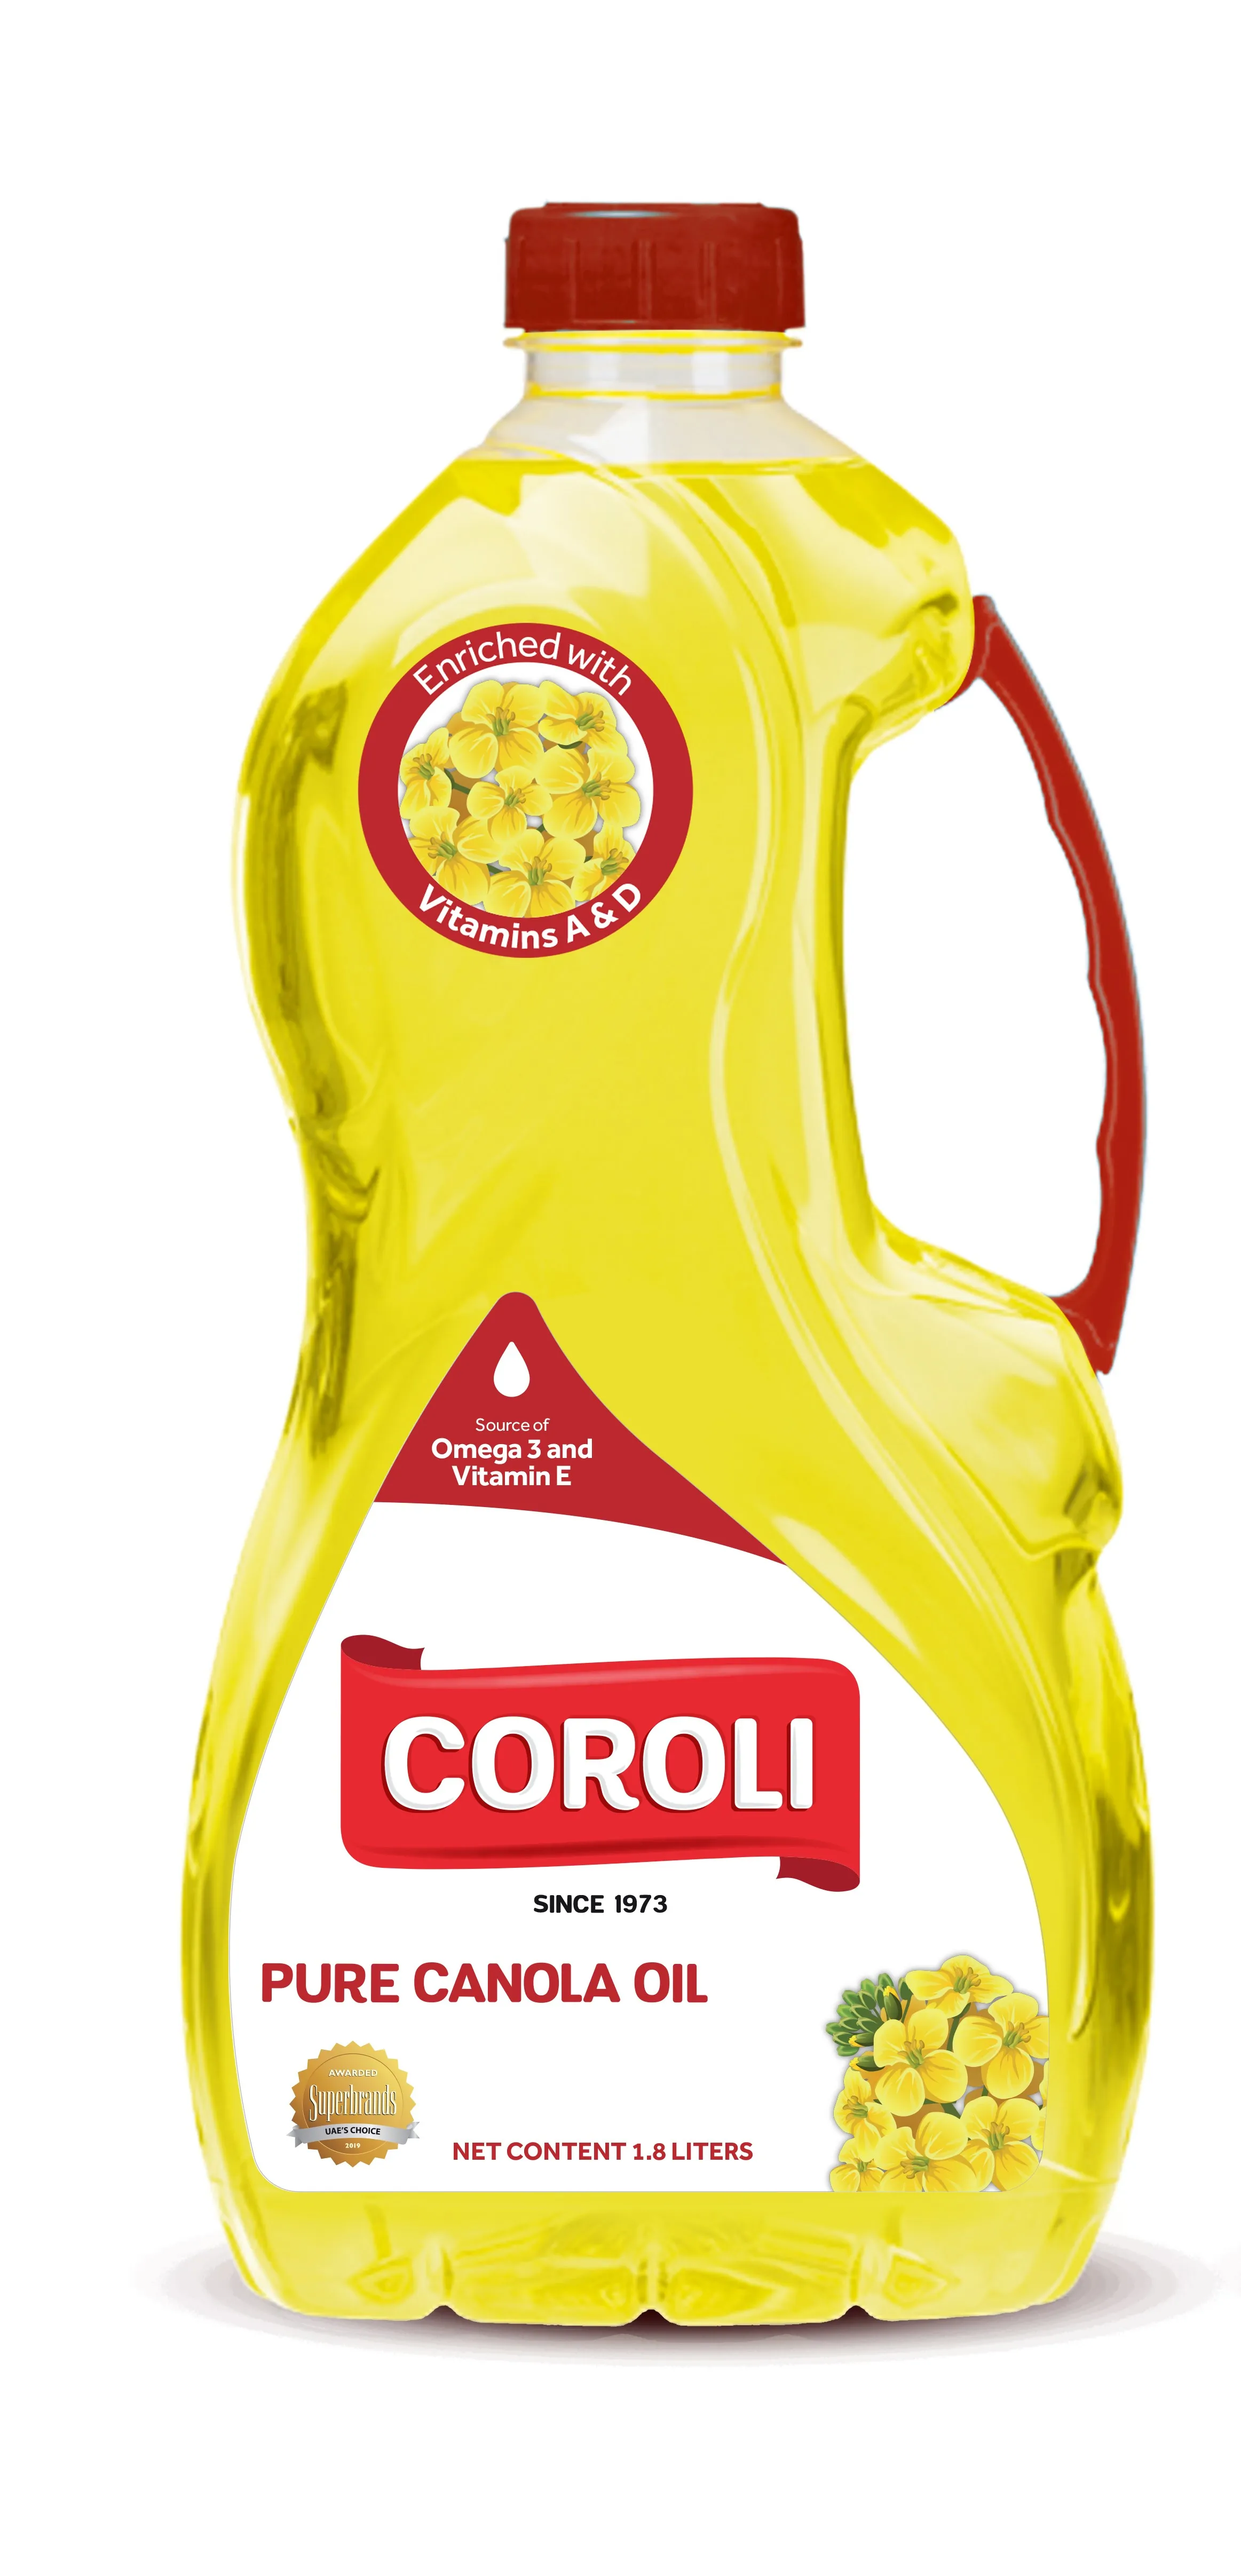 COROLI CANOLA OIL